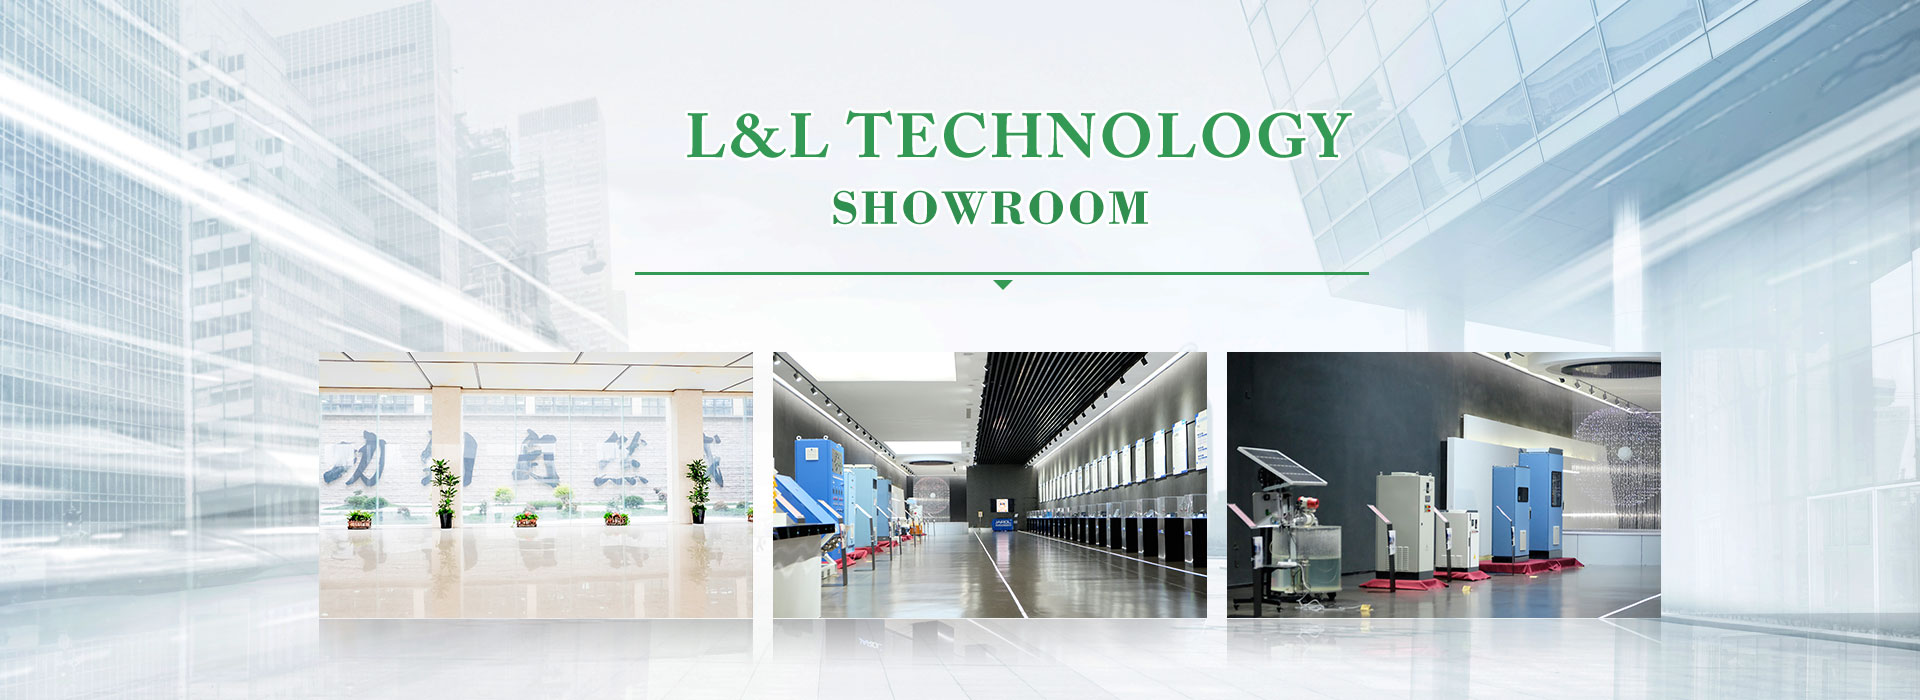 Zhejiang L&L Technology Co.,Ltd. Showroom